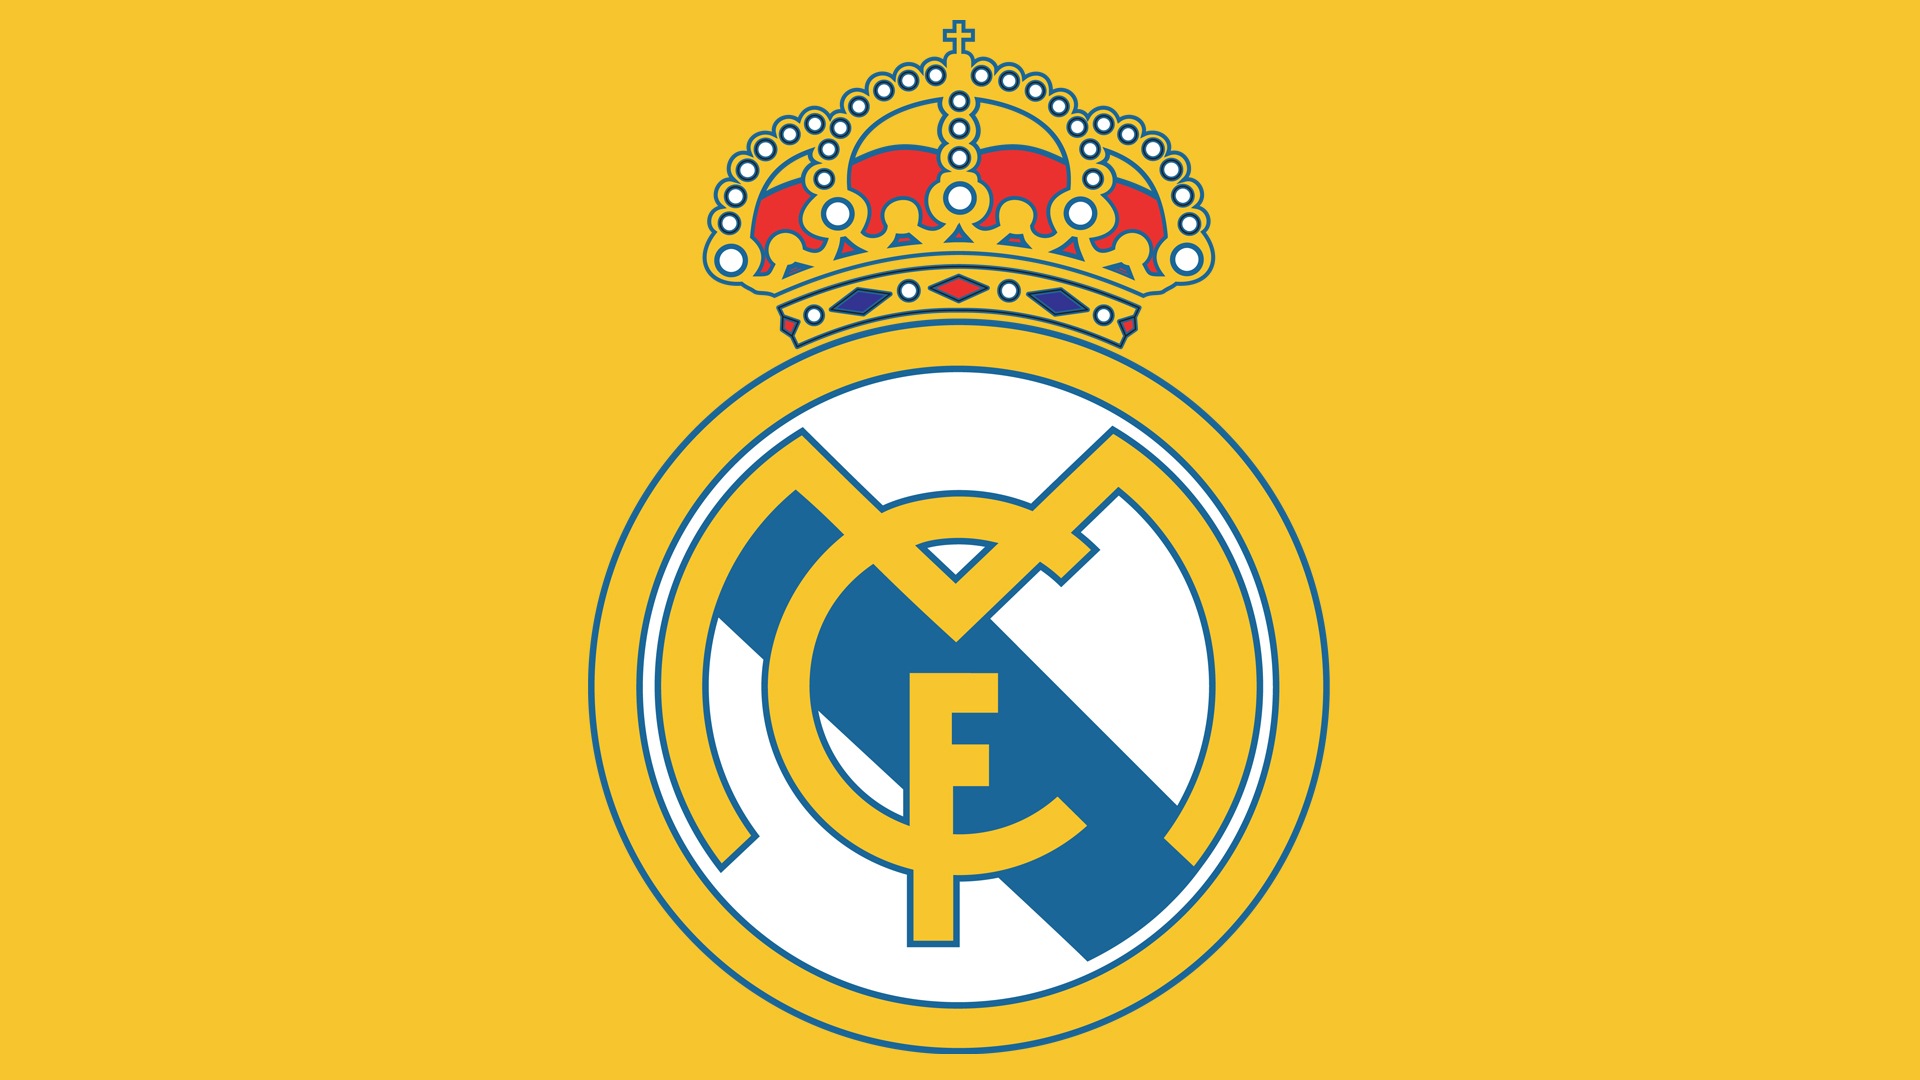 Real Madrid logo : histoire, signification et évolution, symbole